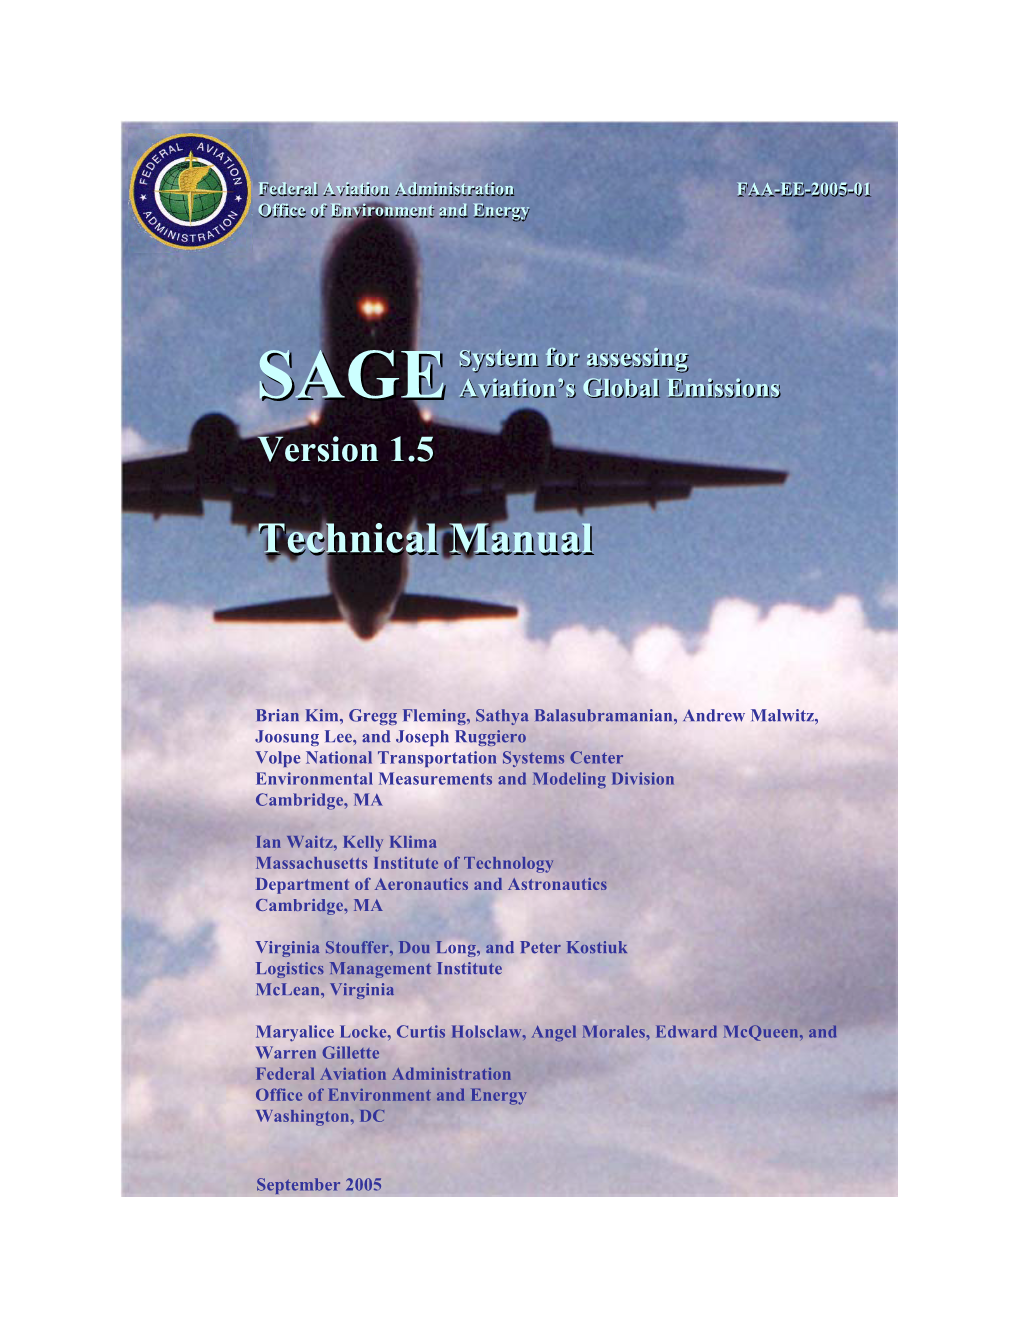 SAGE Version 1.5 Technical Manual